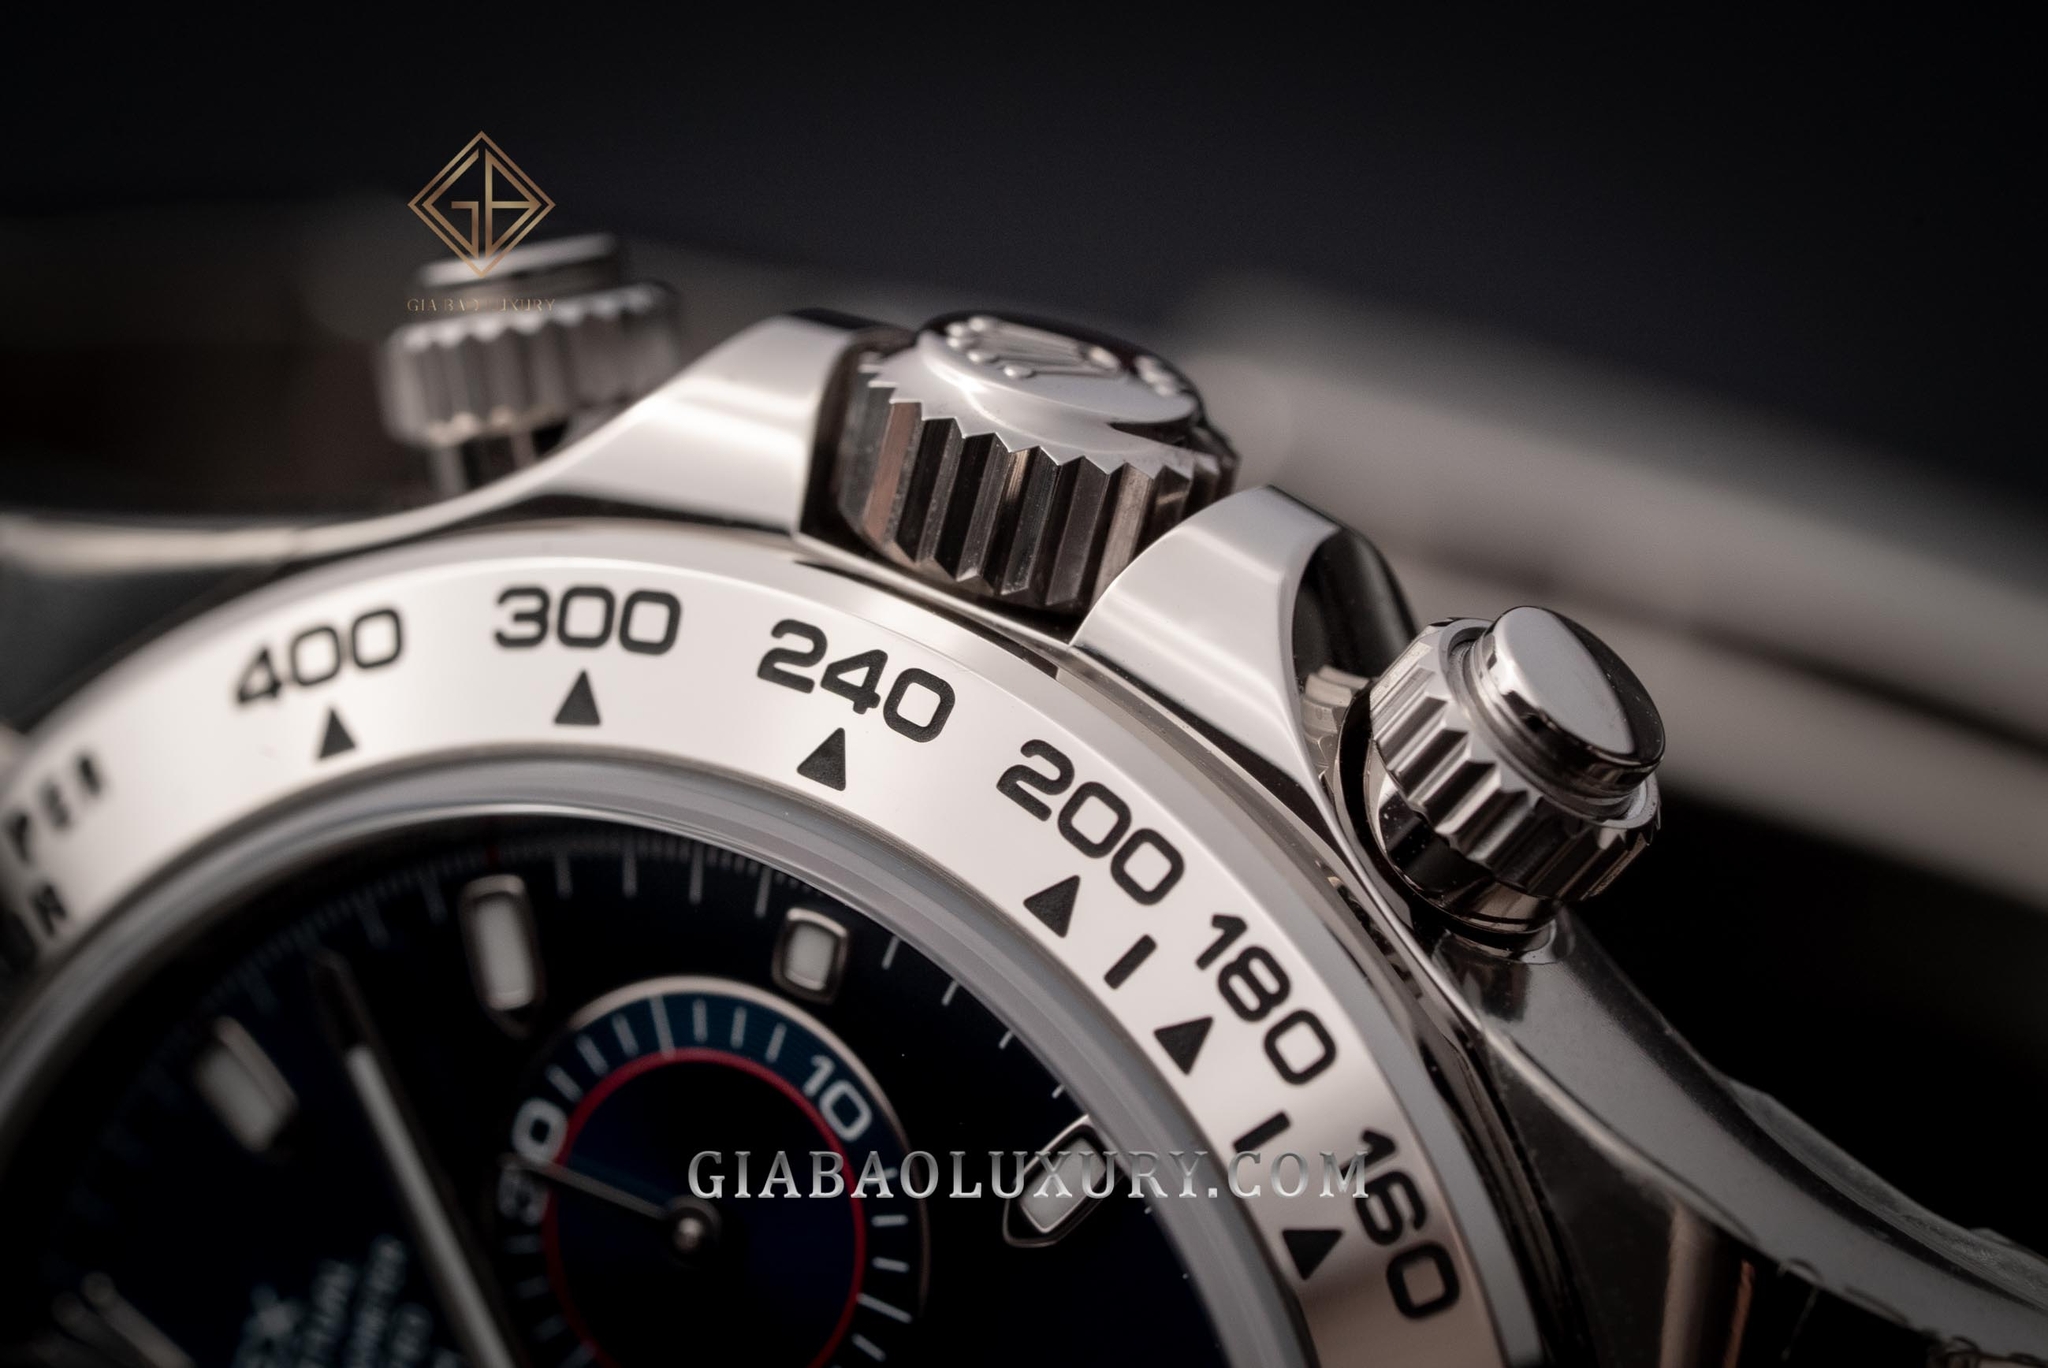 Đồng hồ Rolex Cosmograph Daytona 116509 Mặt Số Xanh